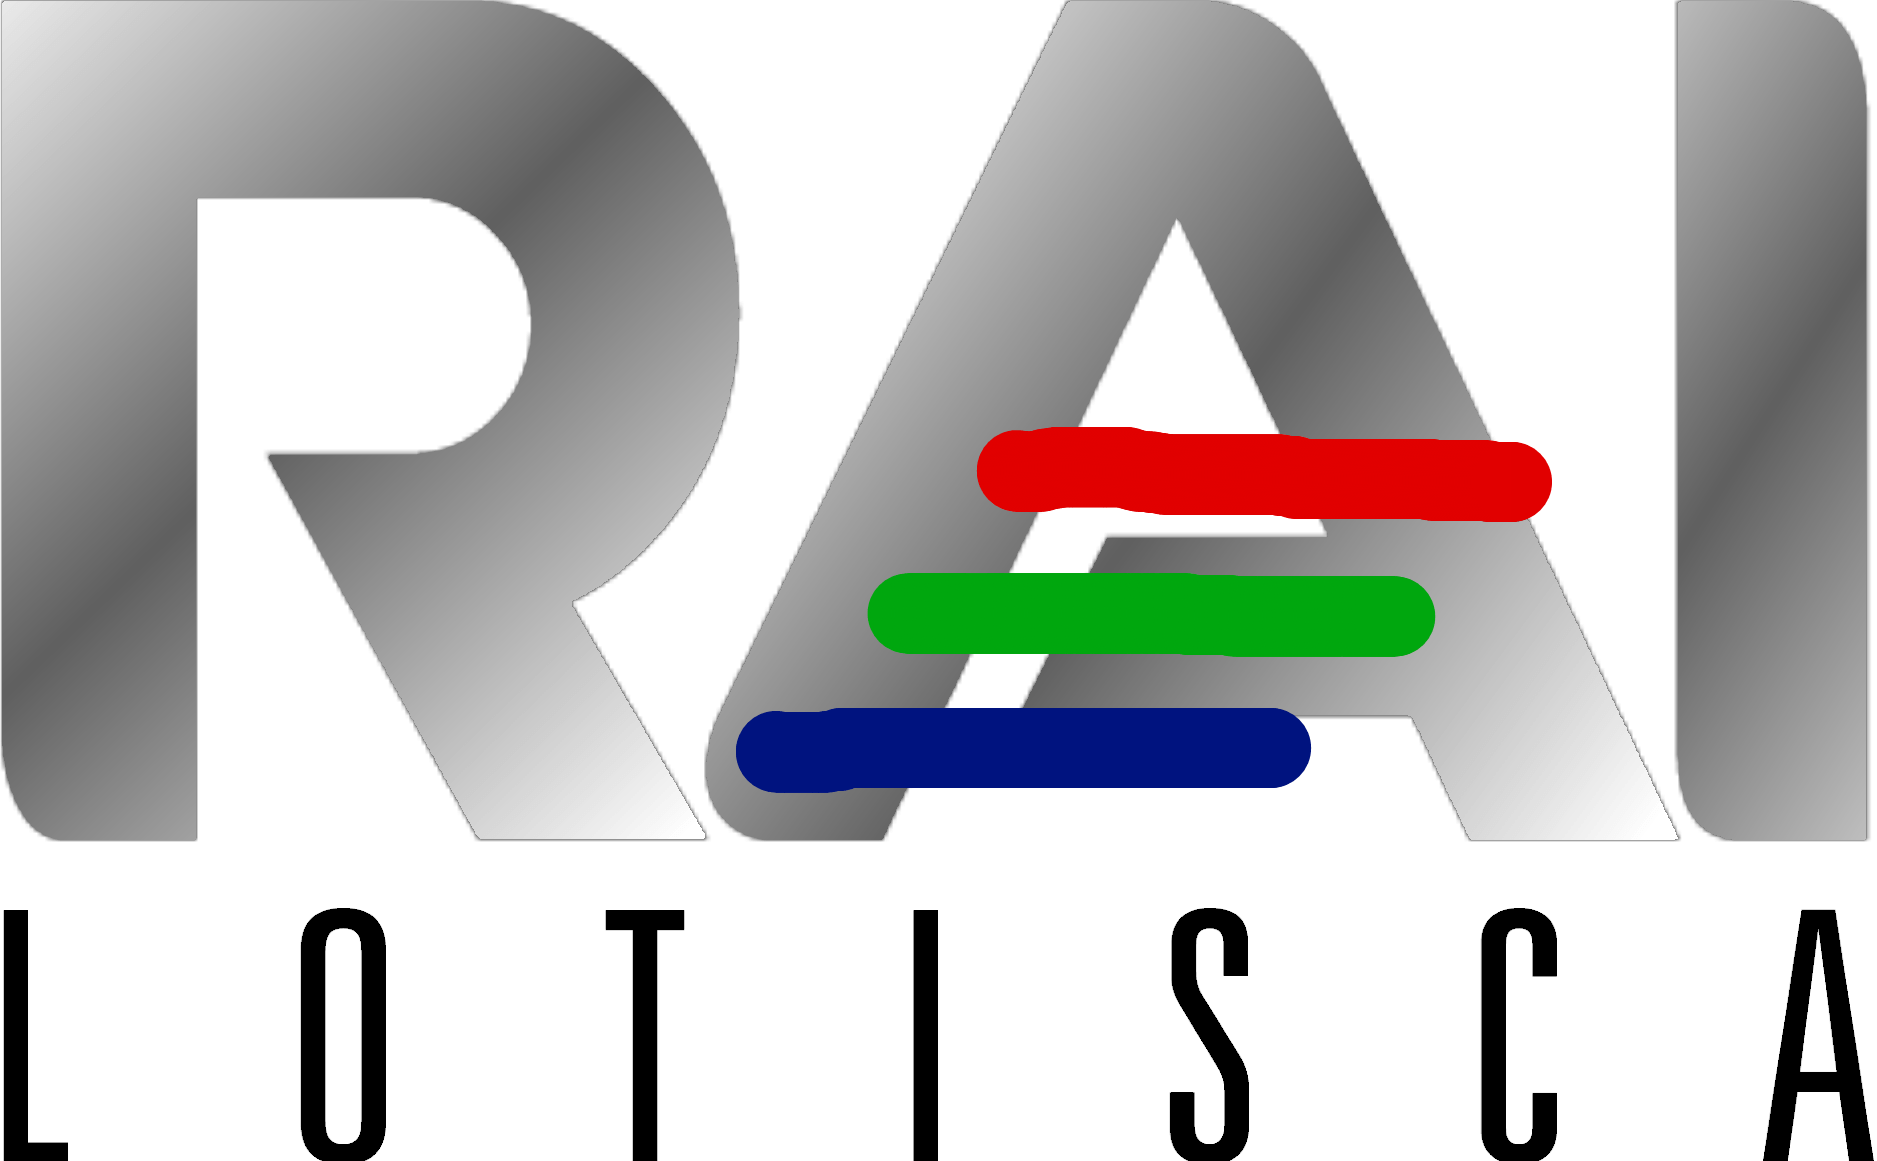 Rai Logo - Rai Lotisca/Logos | Mihsign Vision | FANDOM powered by Wikia